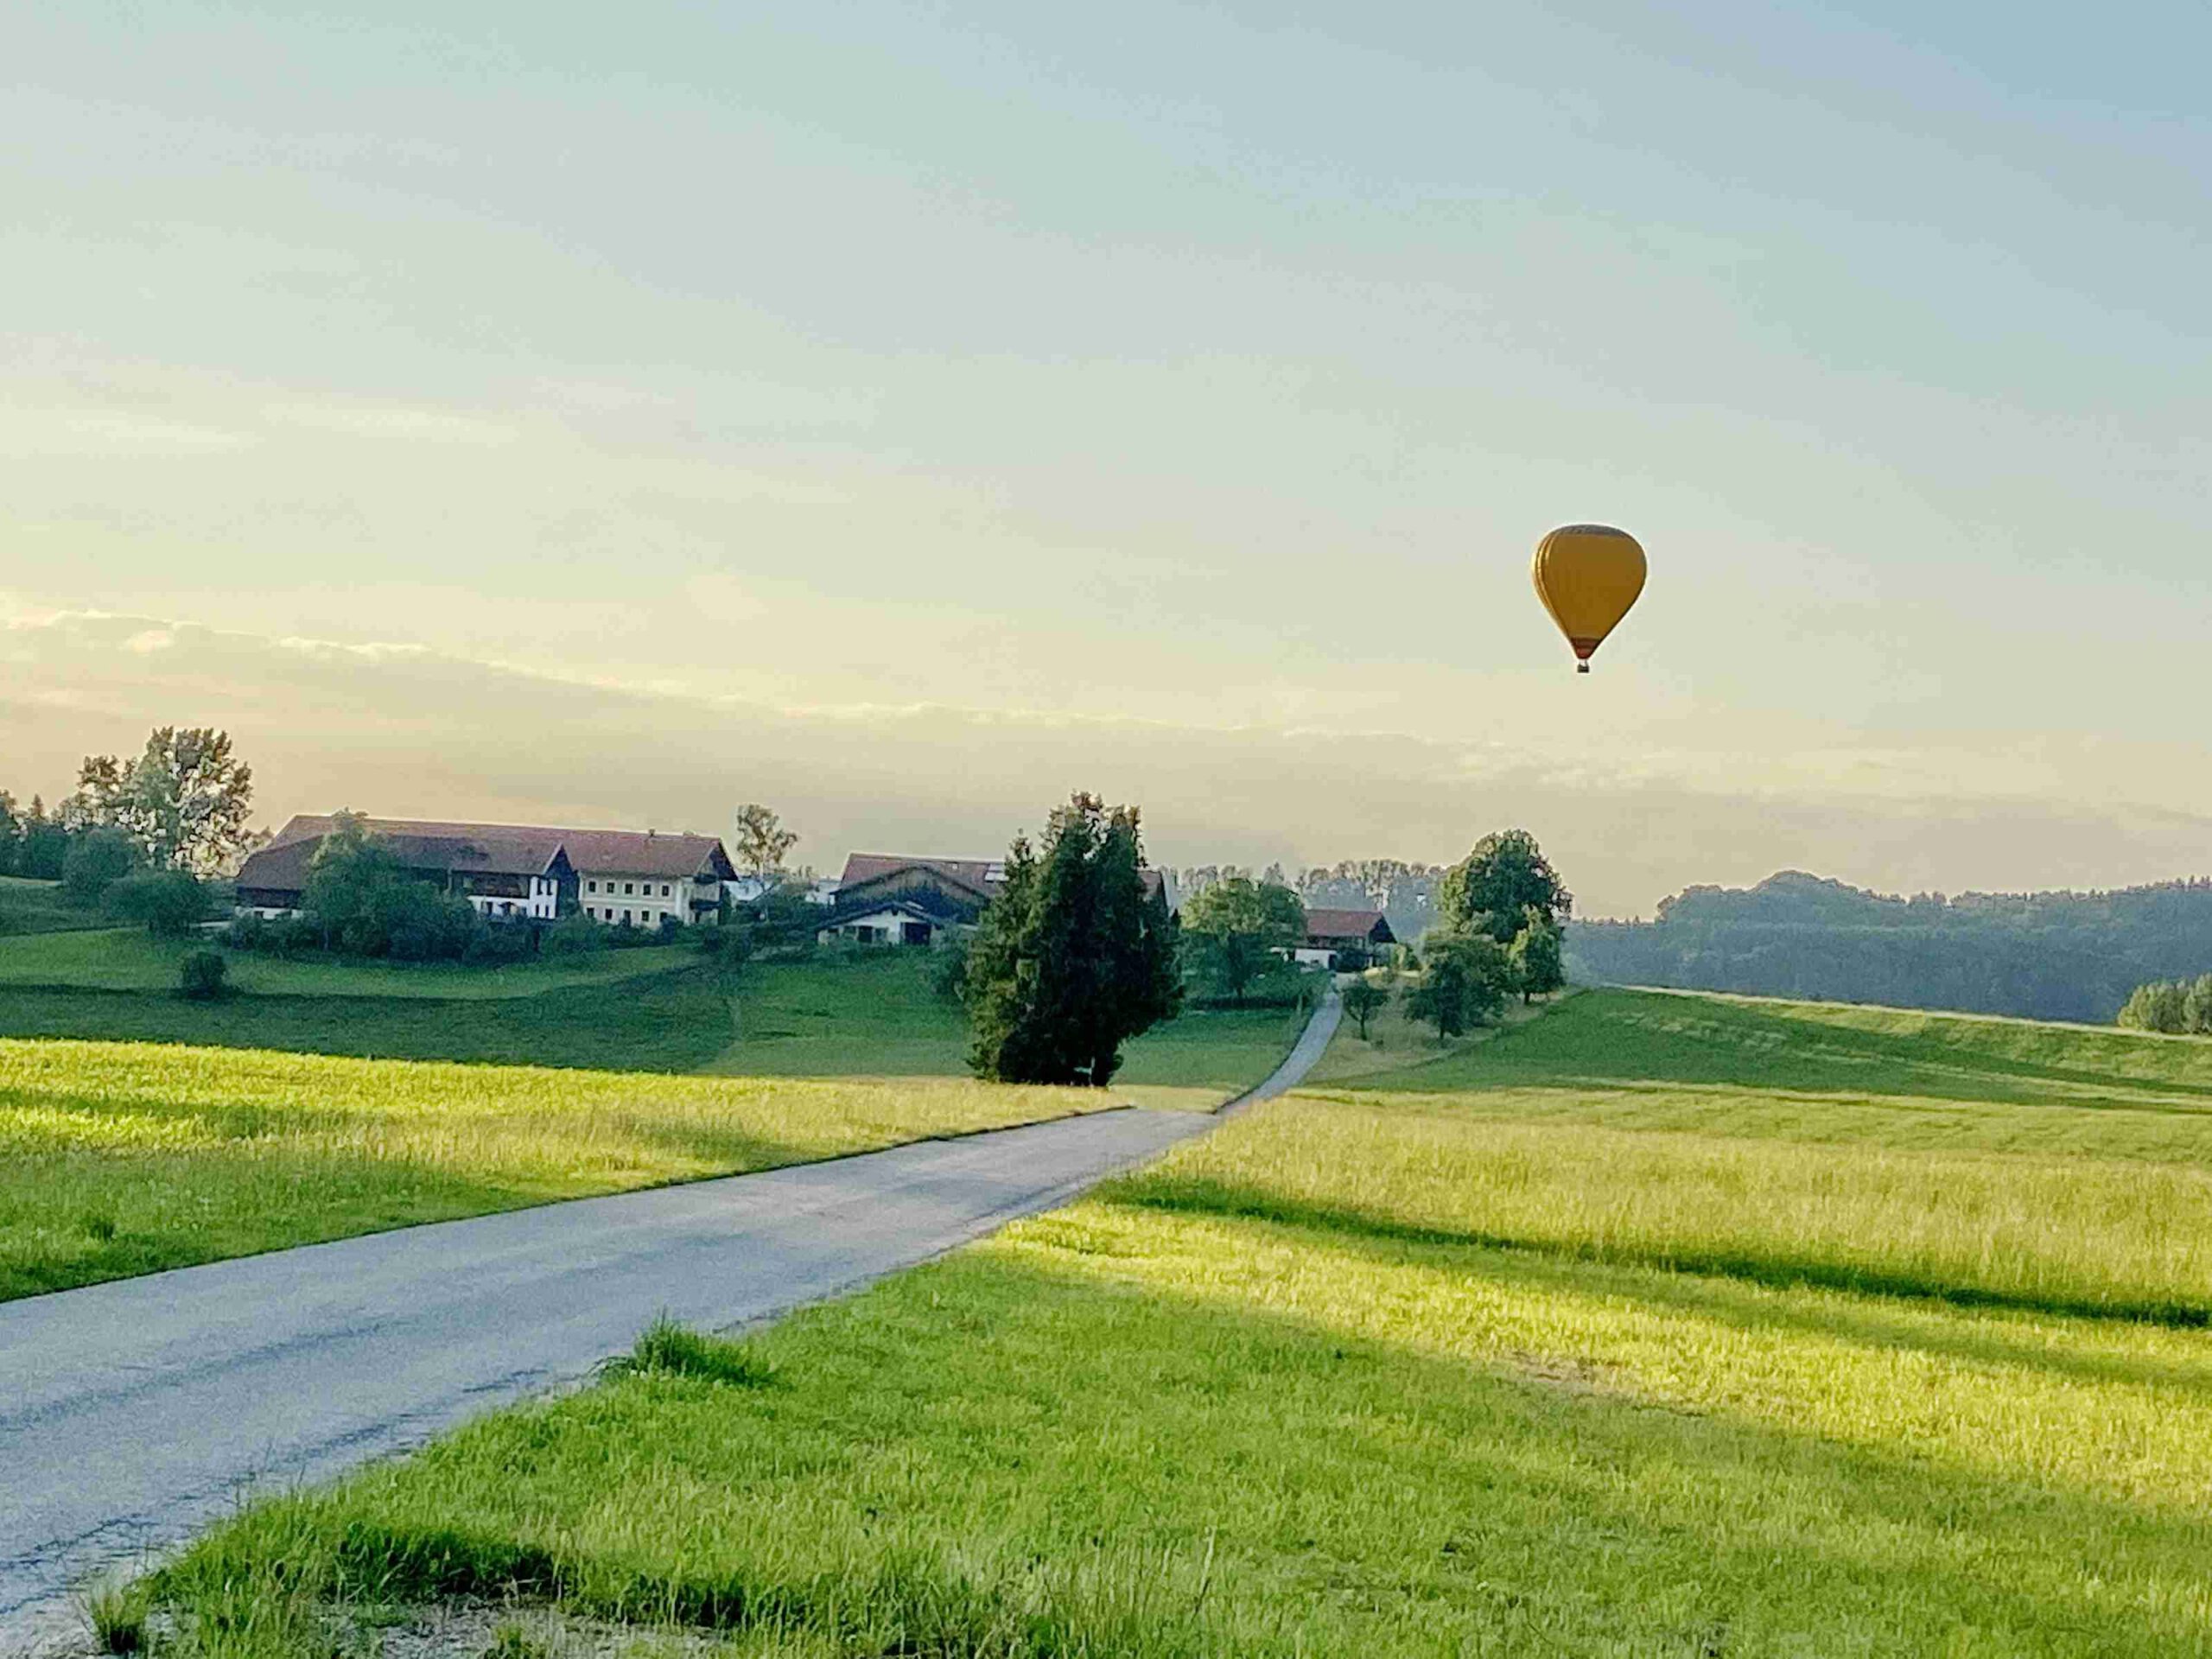 Gelber Heißluftballon schwebt über grüne Landschaft